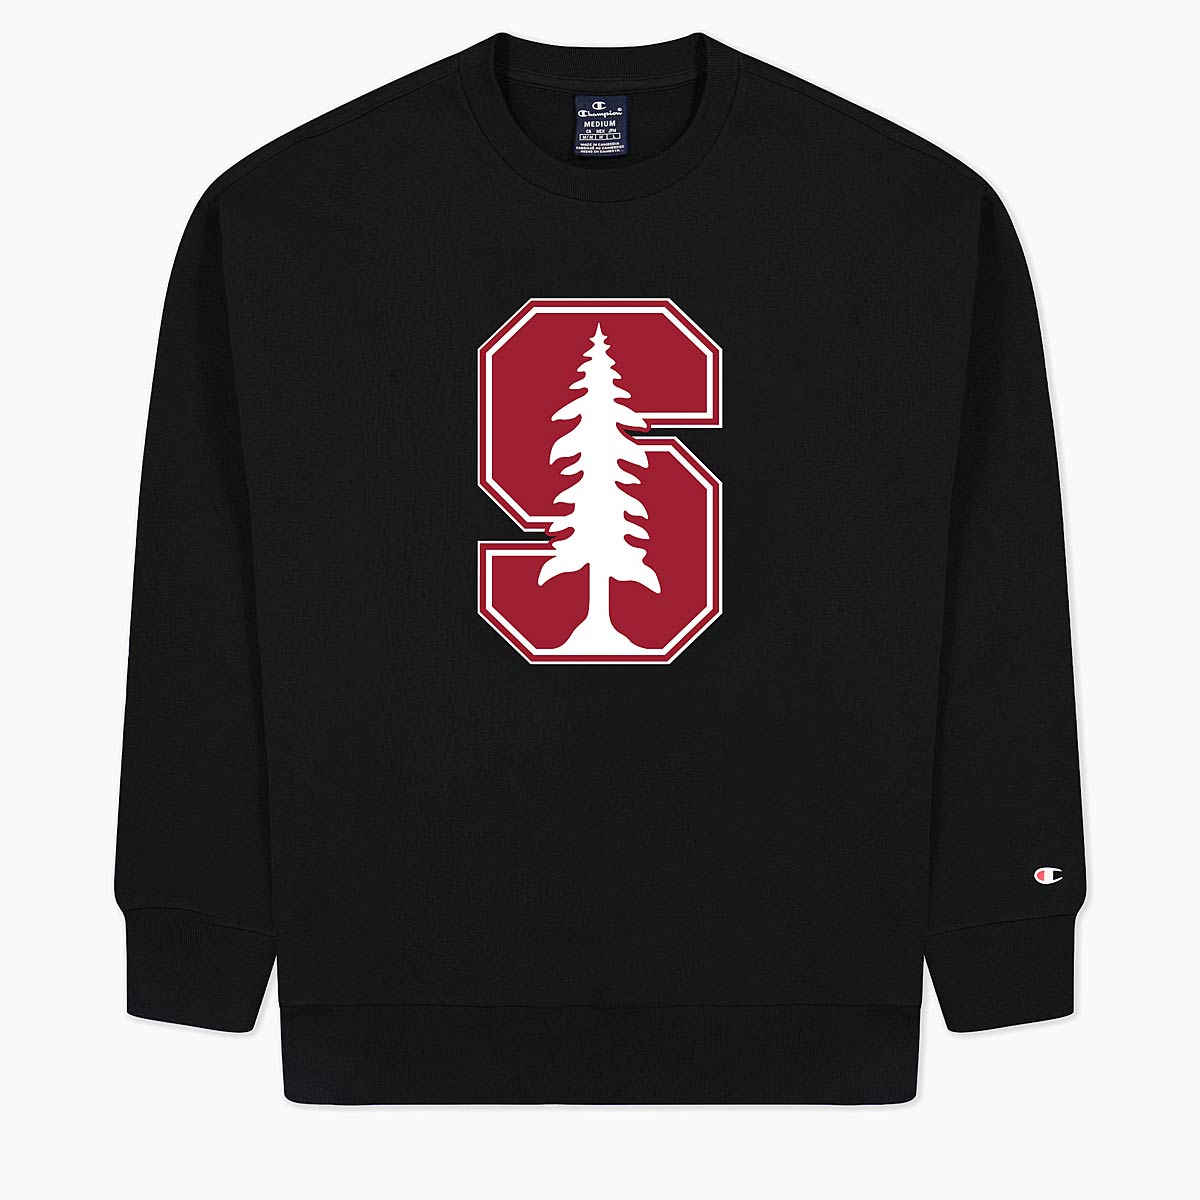 Buy NCAA STANFORD Crewneck Sweatshirt for EUR 49.99 on KICKZ.com!